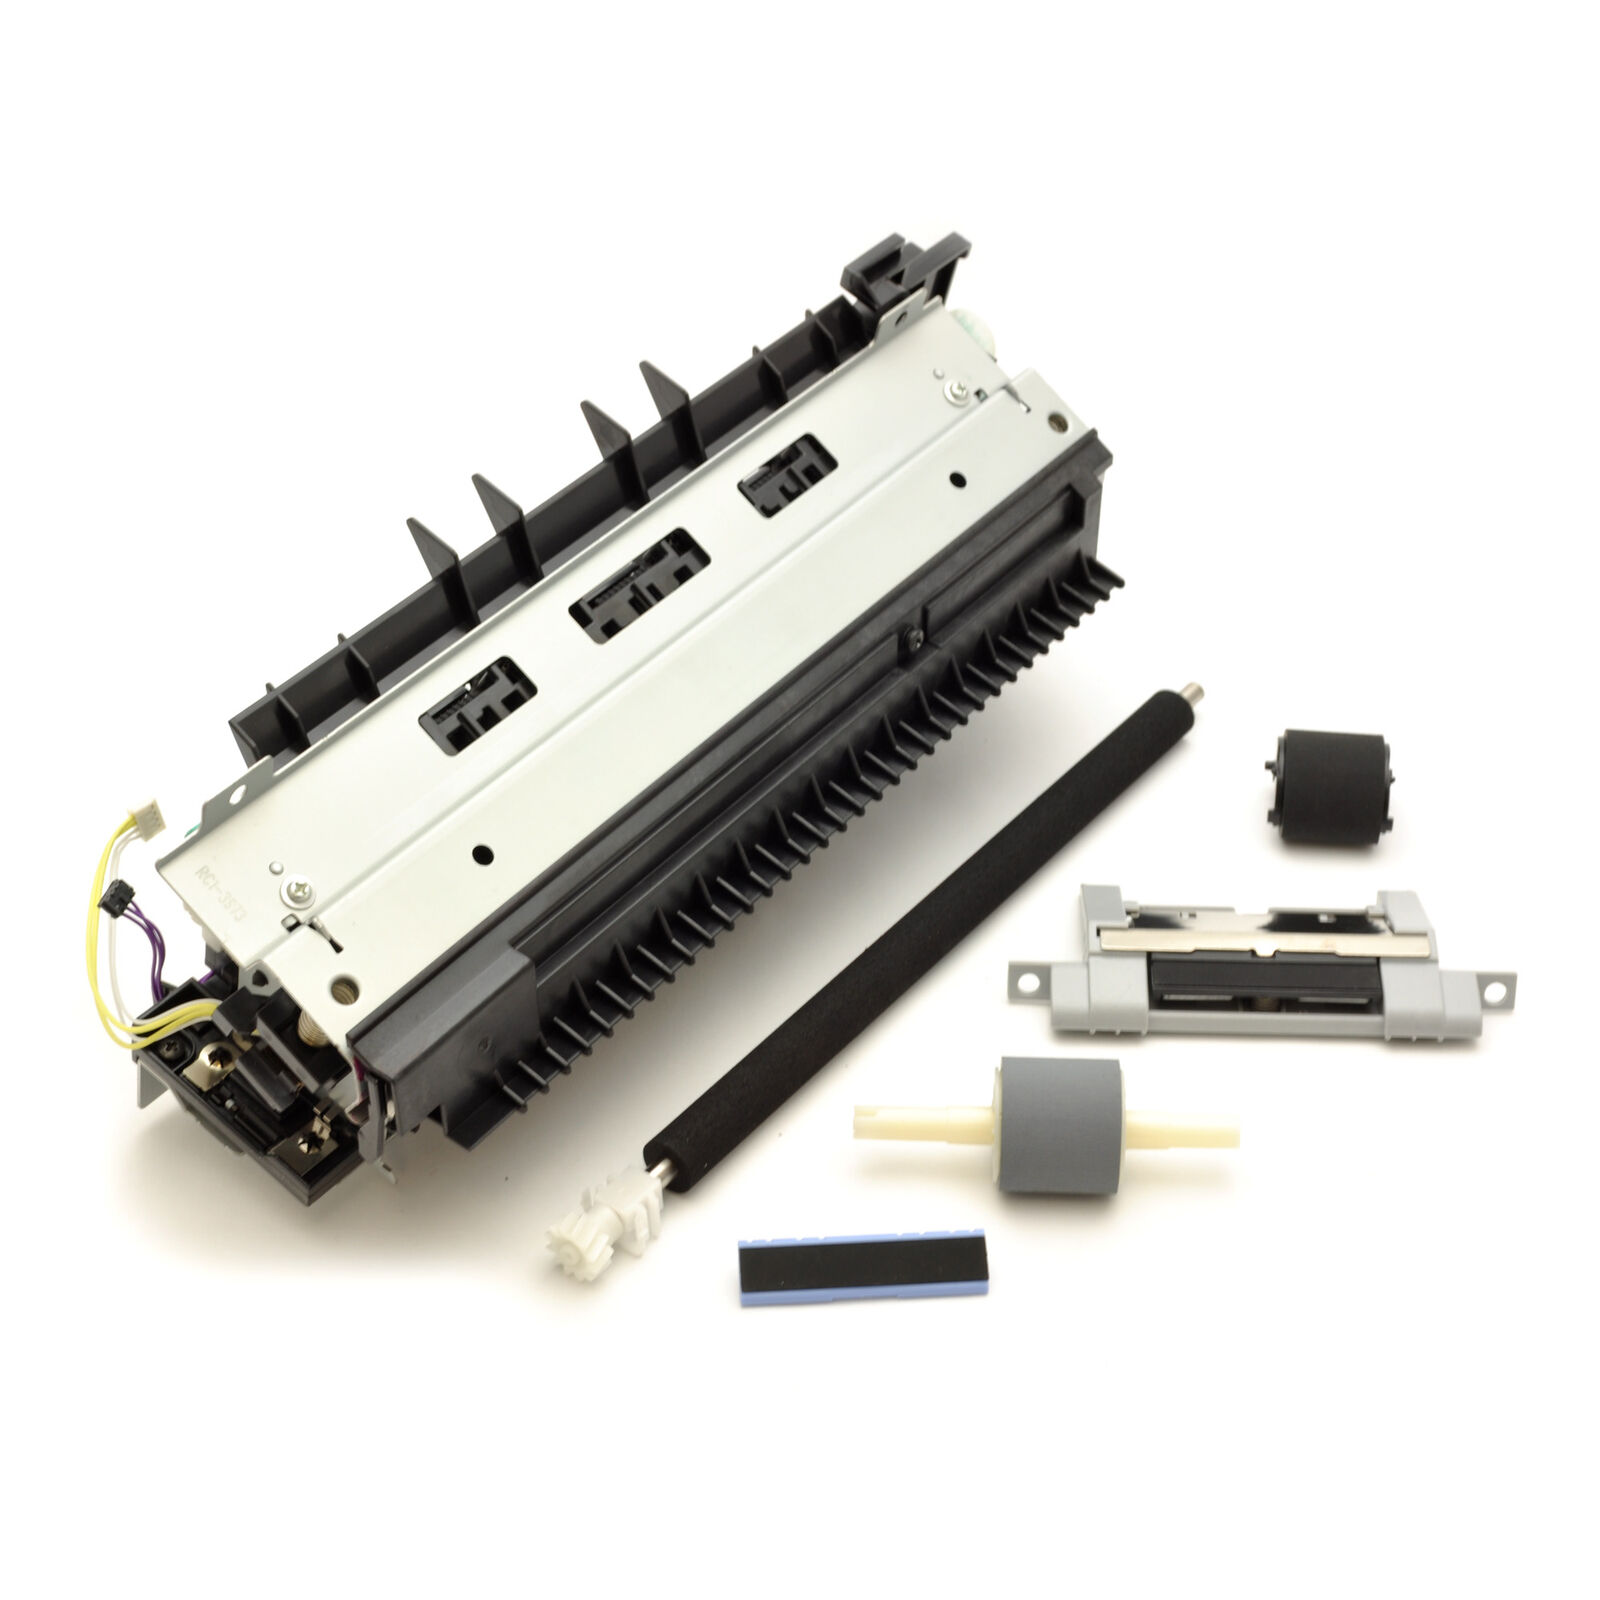 Printel H3980-60001 Maintenance Kit (110V) for HP LaserJet 2400, with RM1-1491